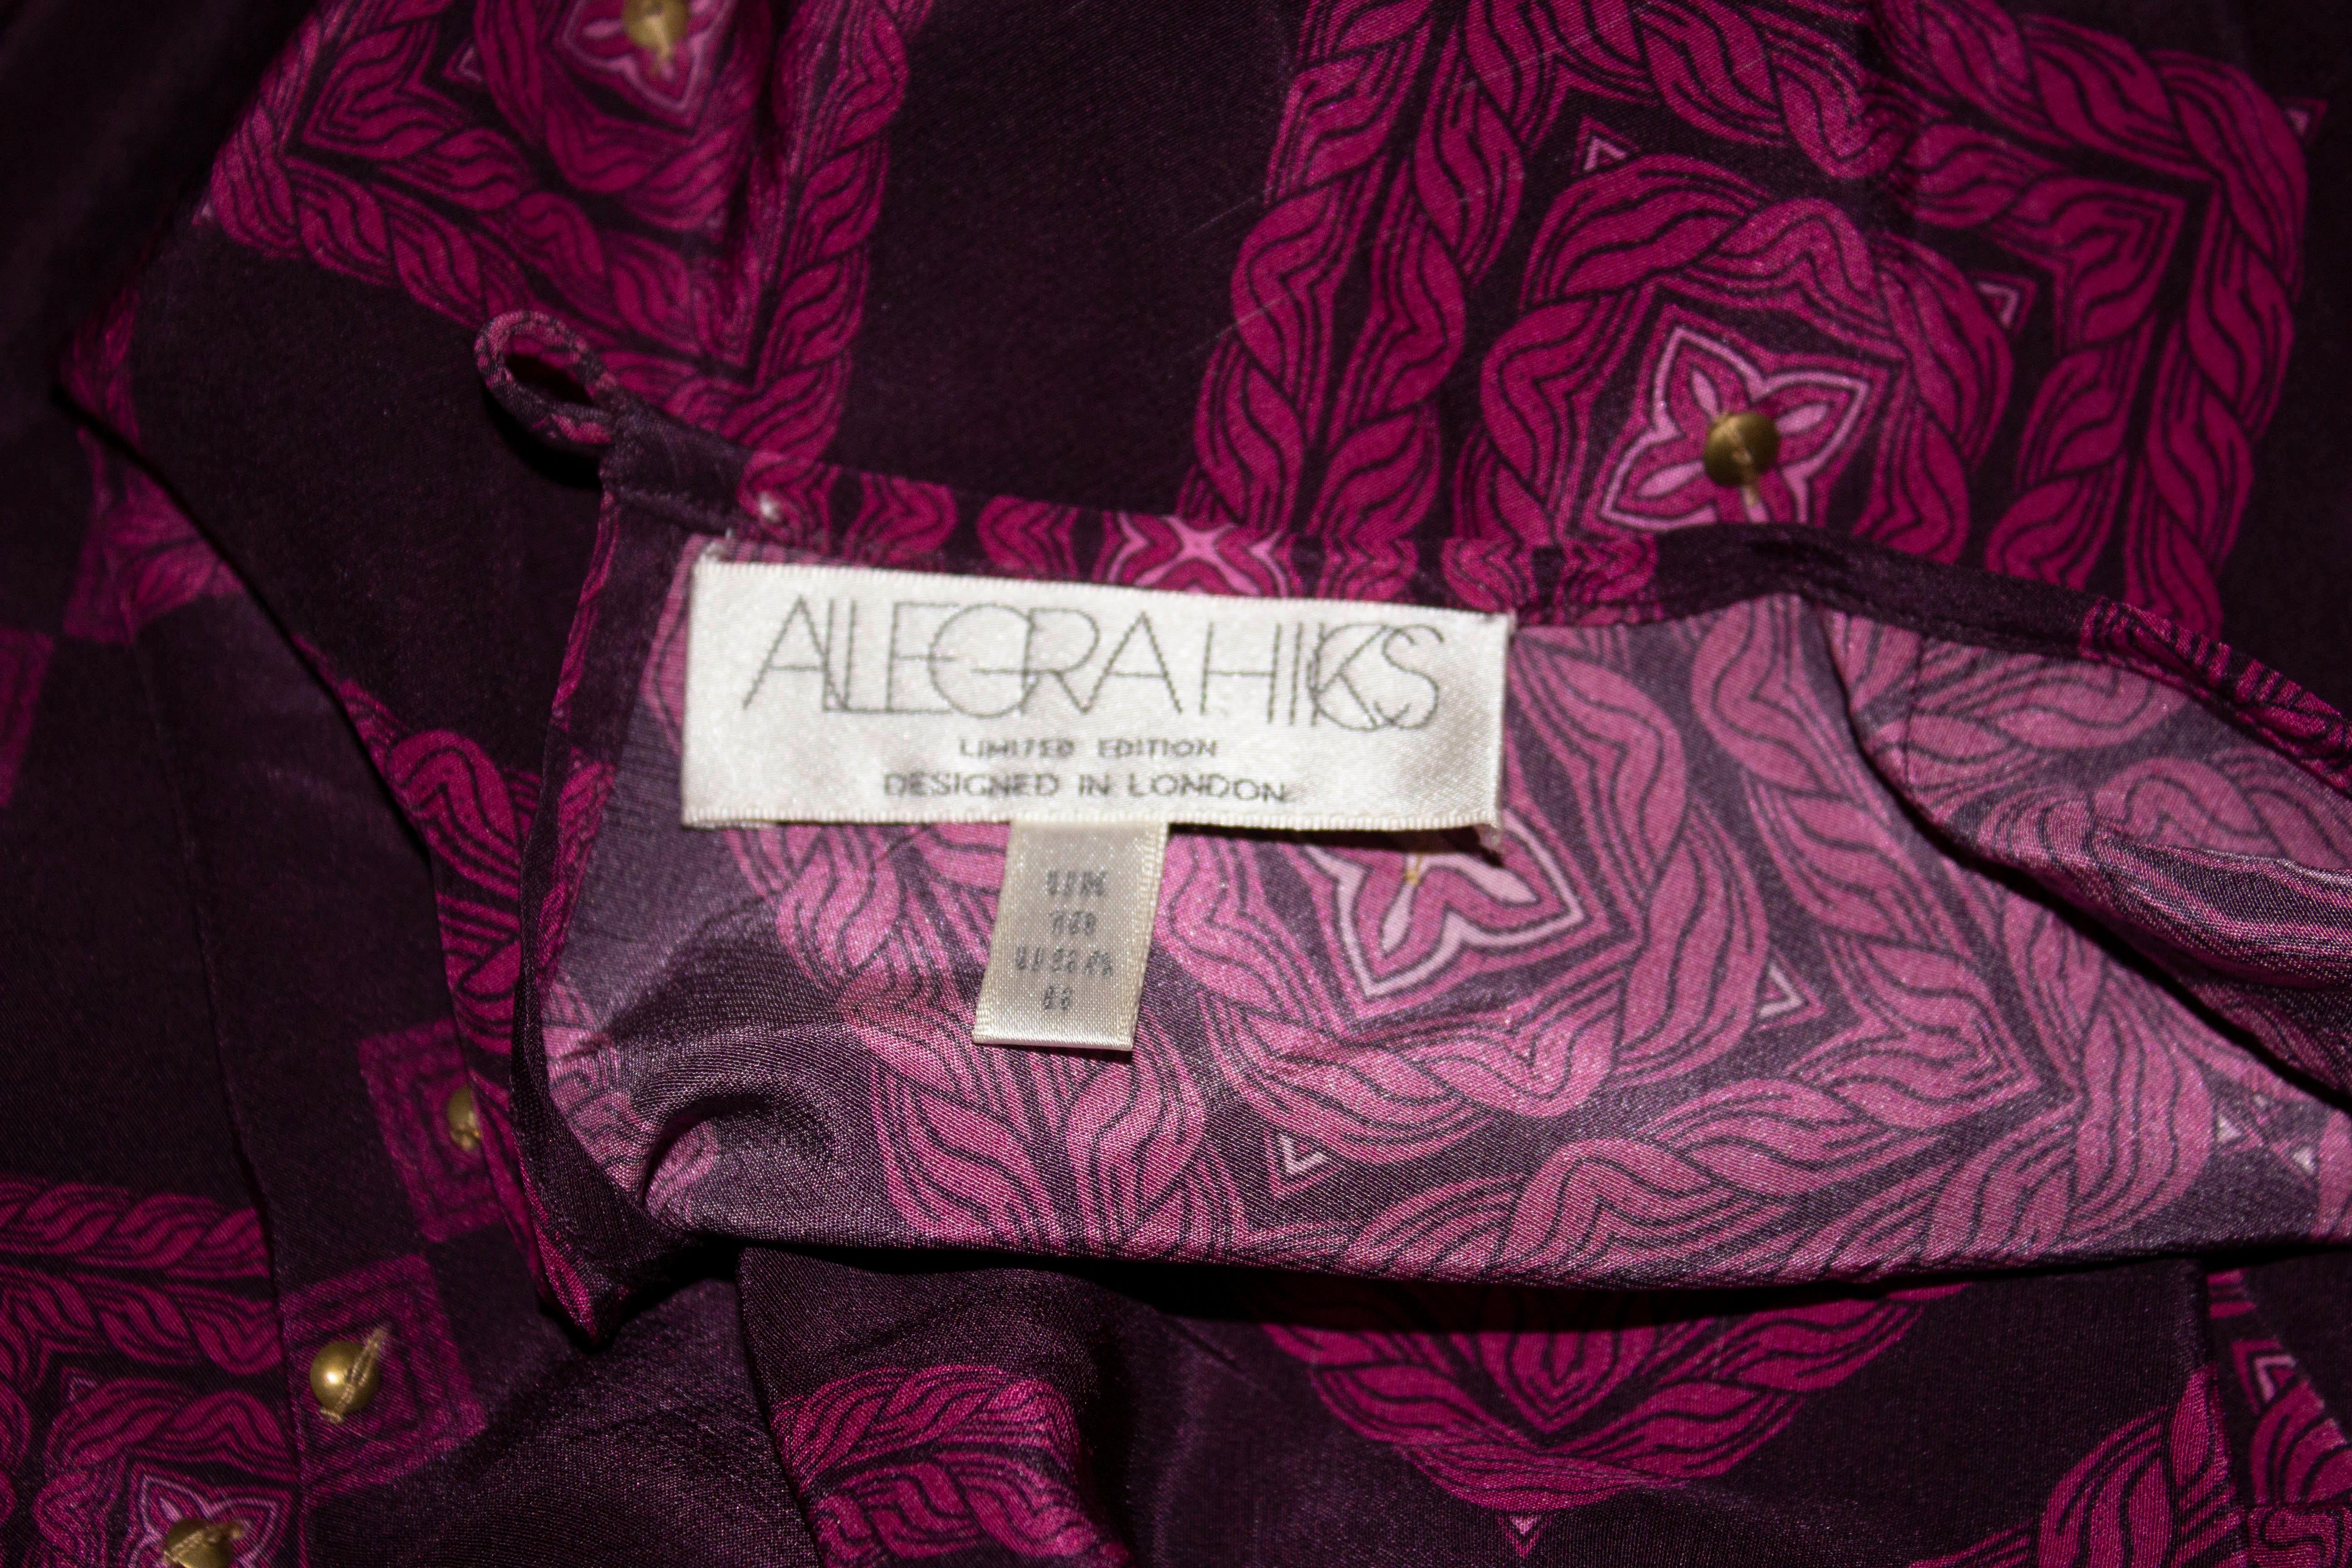 Allegra Hicks Limited Range Purple Silk Dress In Good Condition For Sale In London, GB